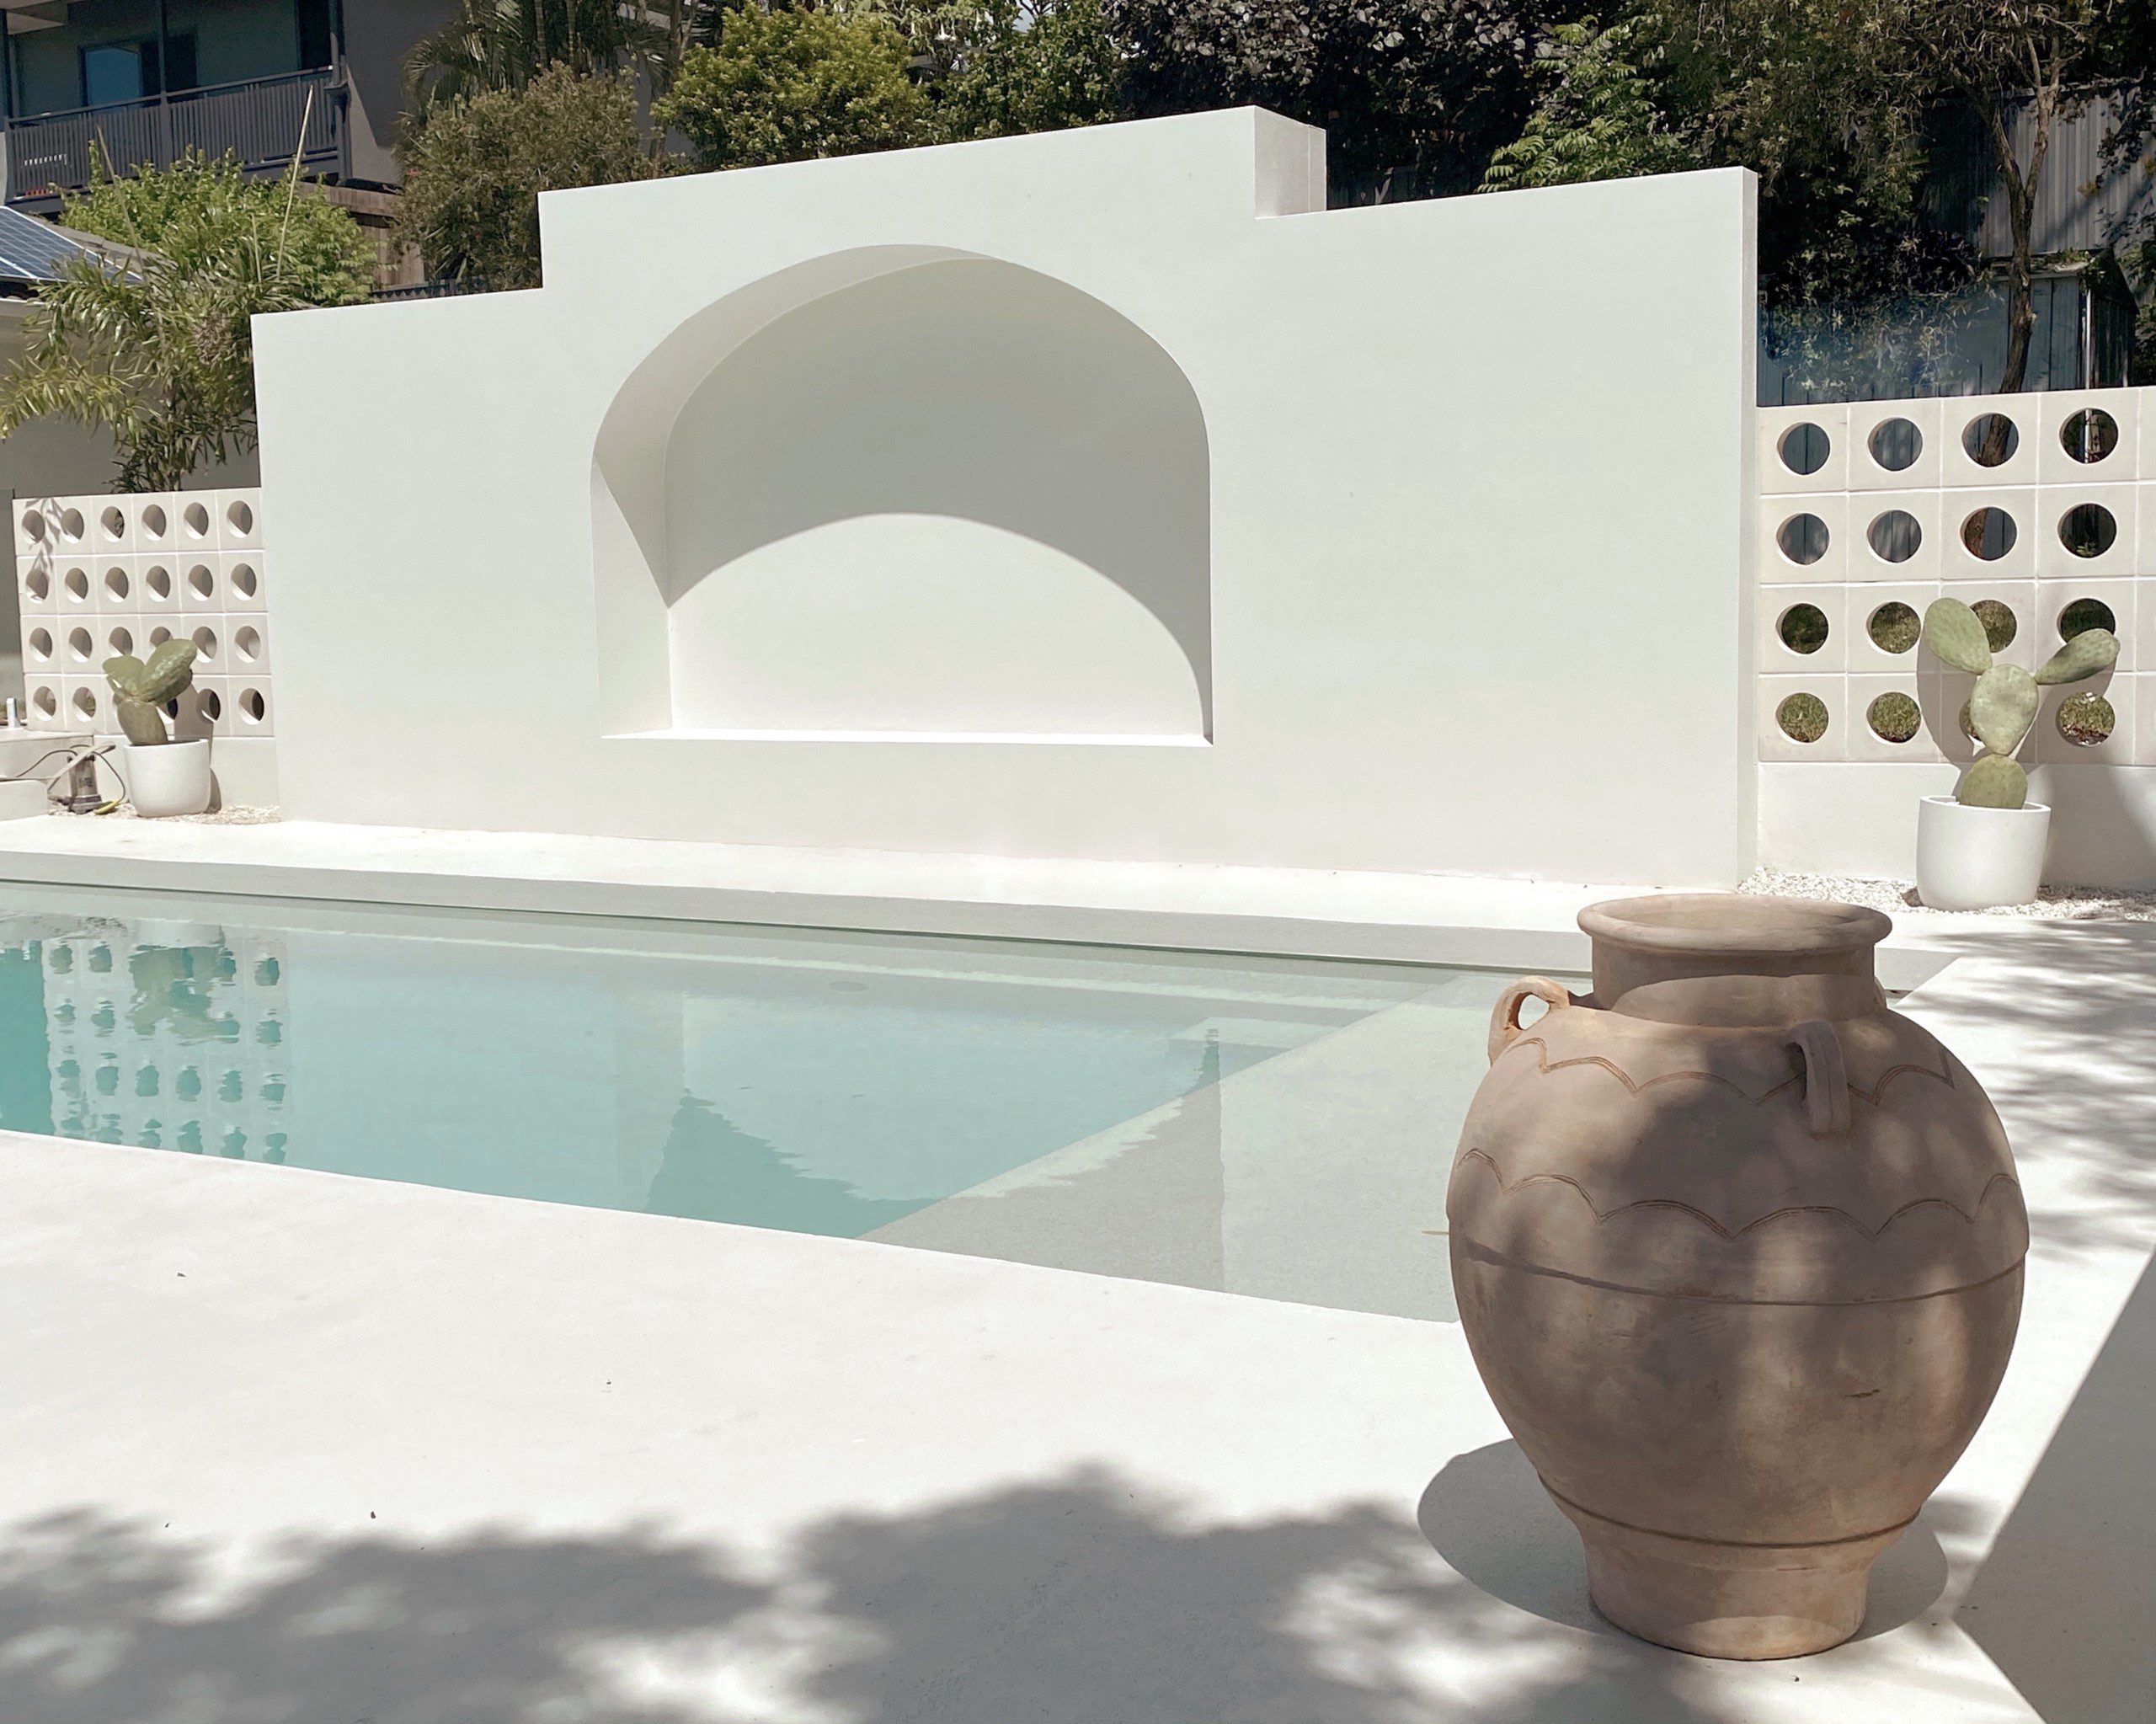 Calma Blanca Pool Deck – Mediterranean Oasis